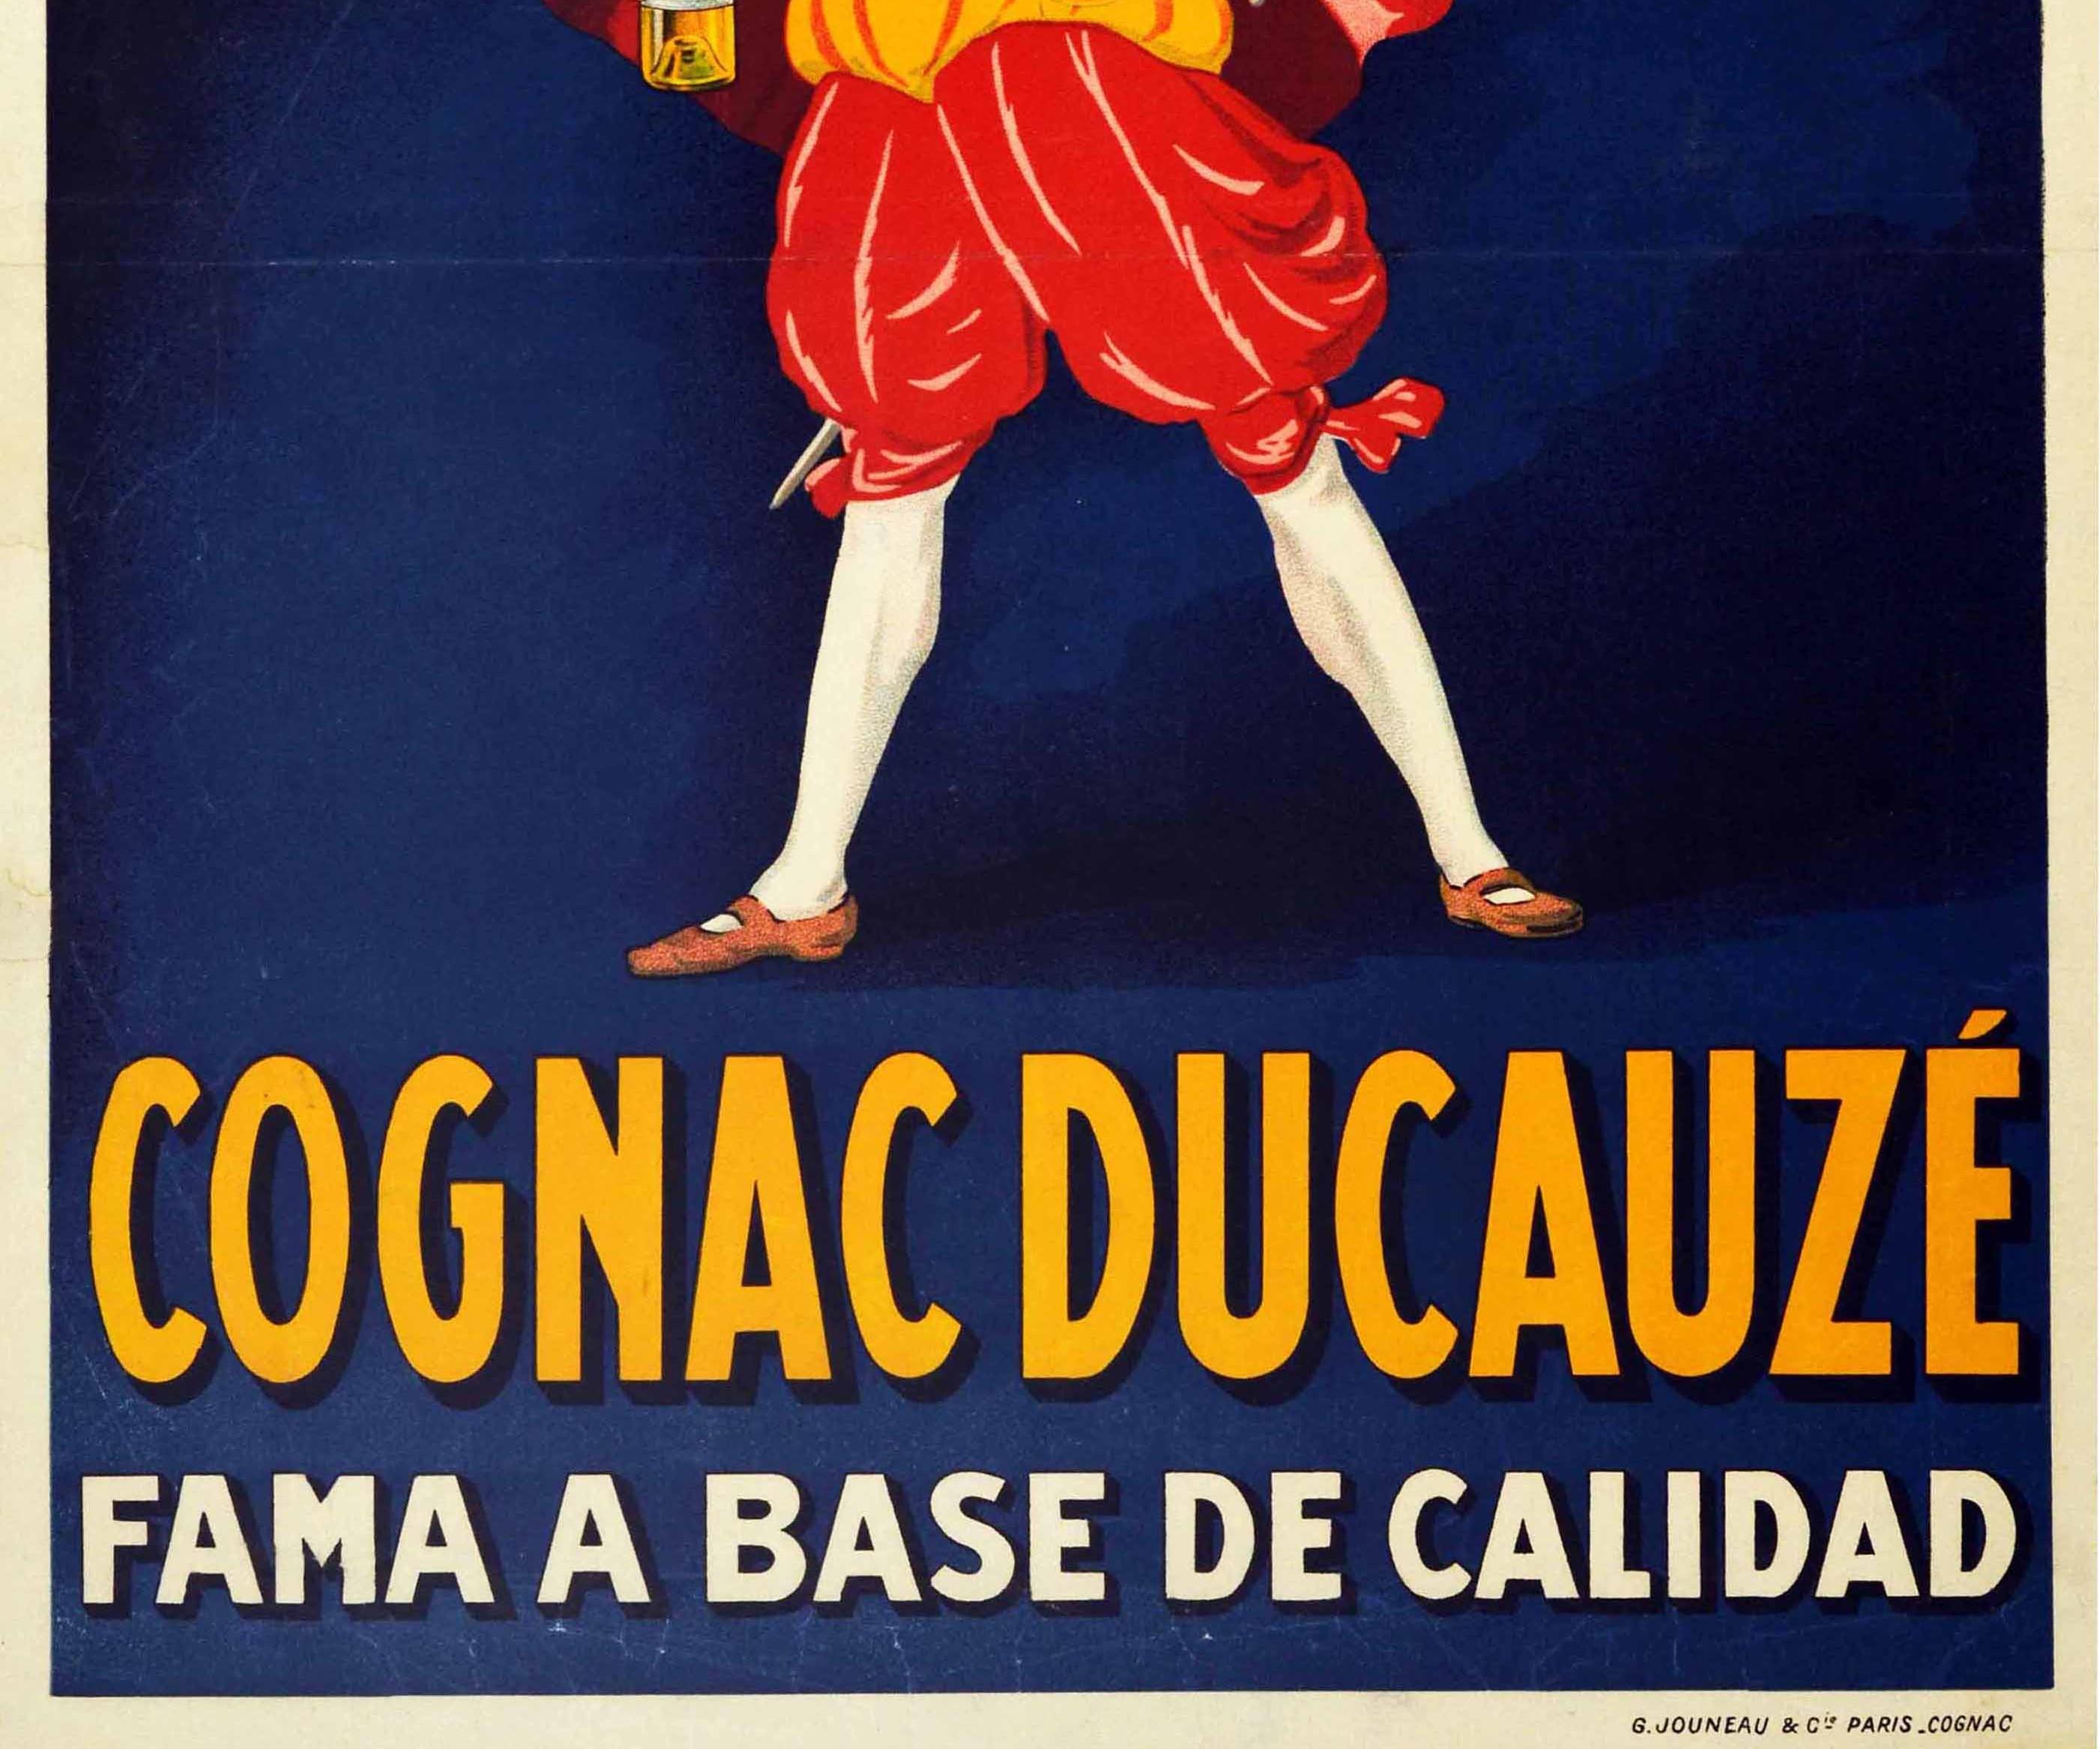 Original Antikes Getränke-Poster Cognac Ducauze Fama A Base De Calidad Fame Qualität (Schwarz), Print, von Unknown